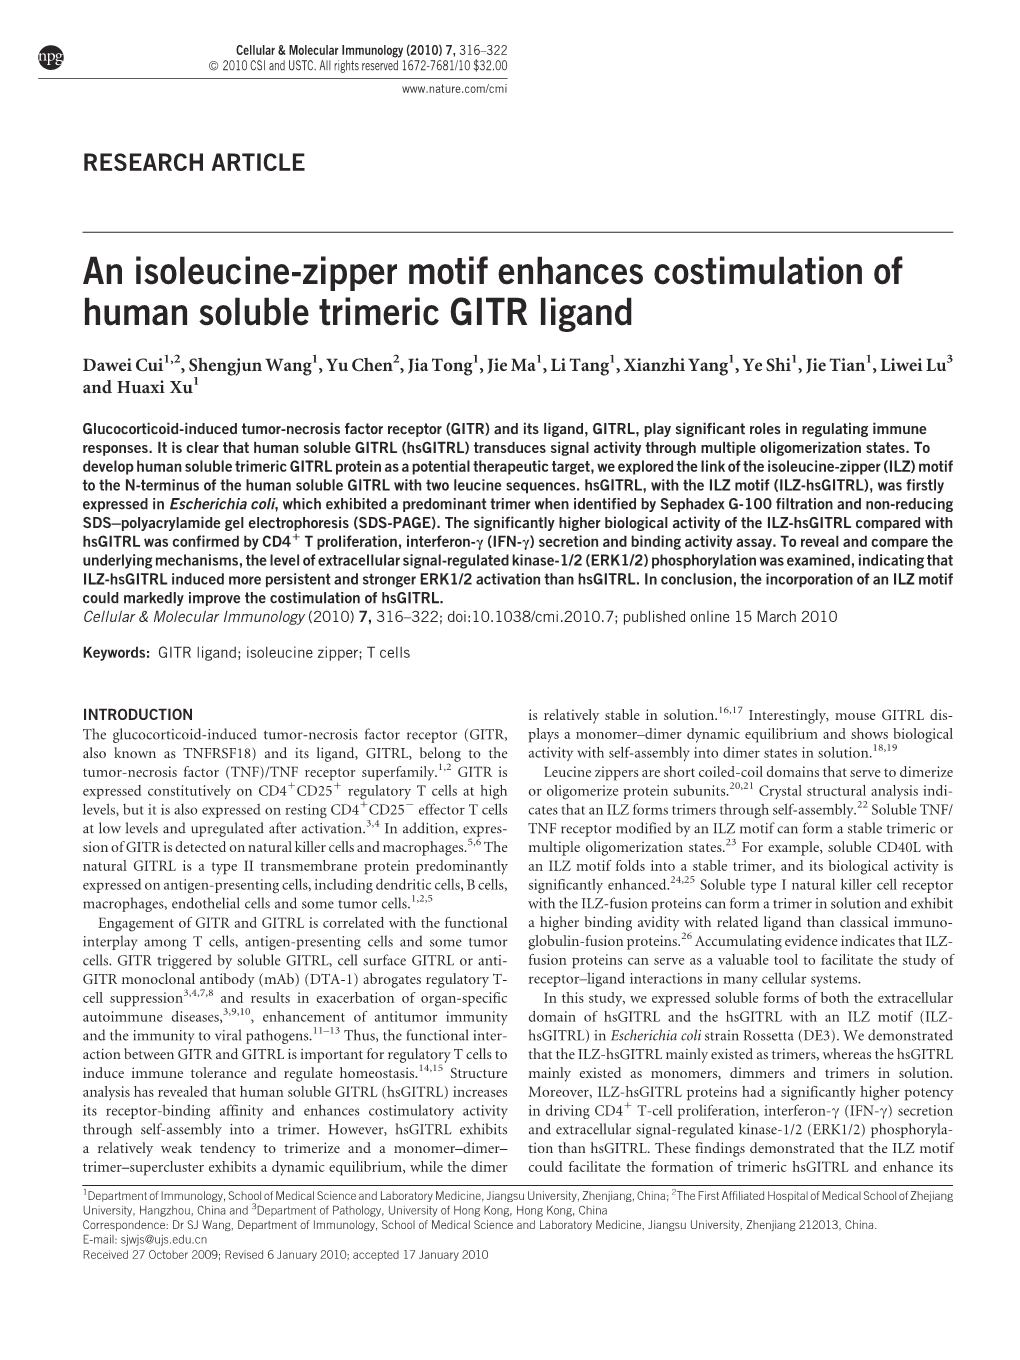 An Isoleucine-Zipper Motif Enhances Costimulation of Human Soluble Trimeric GITR Ligand